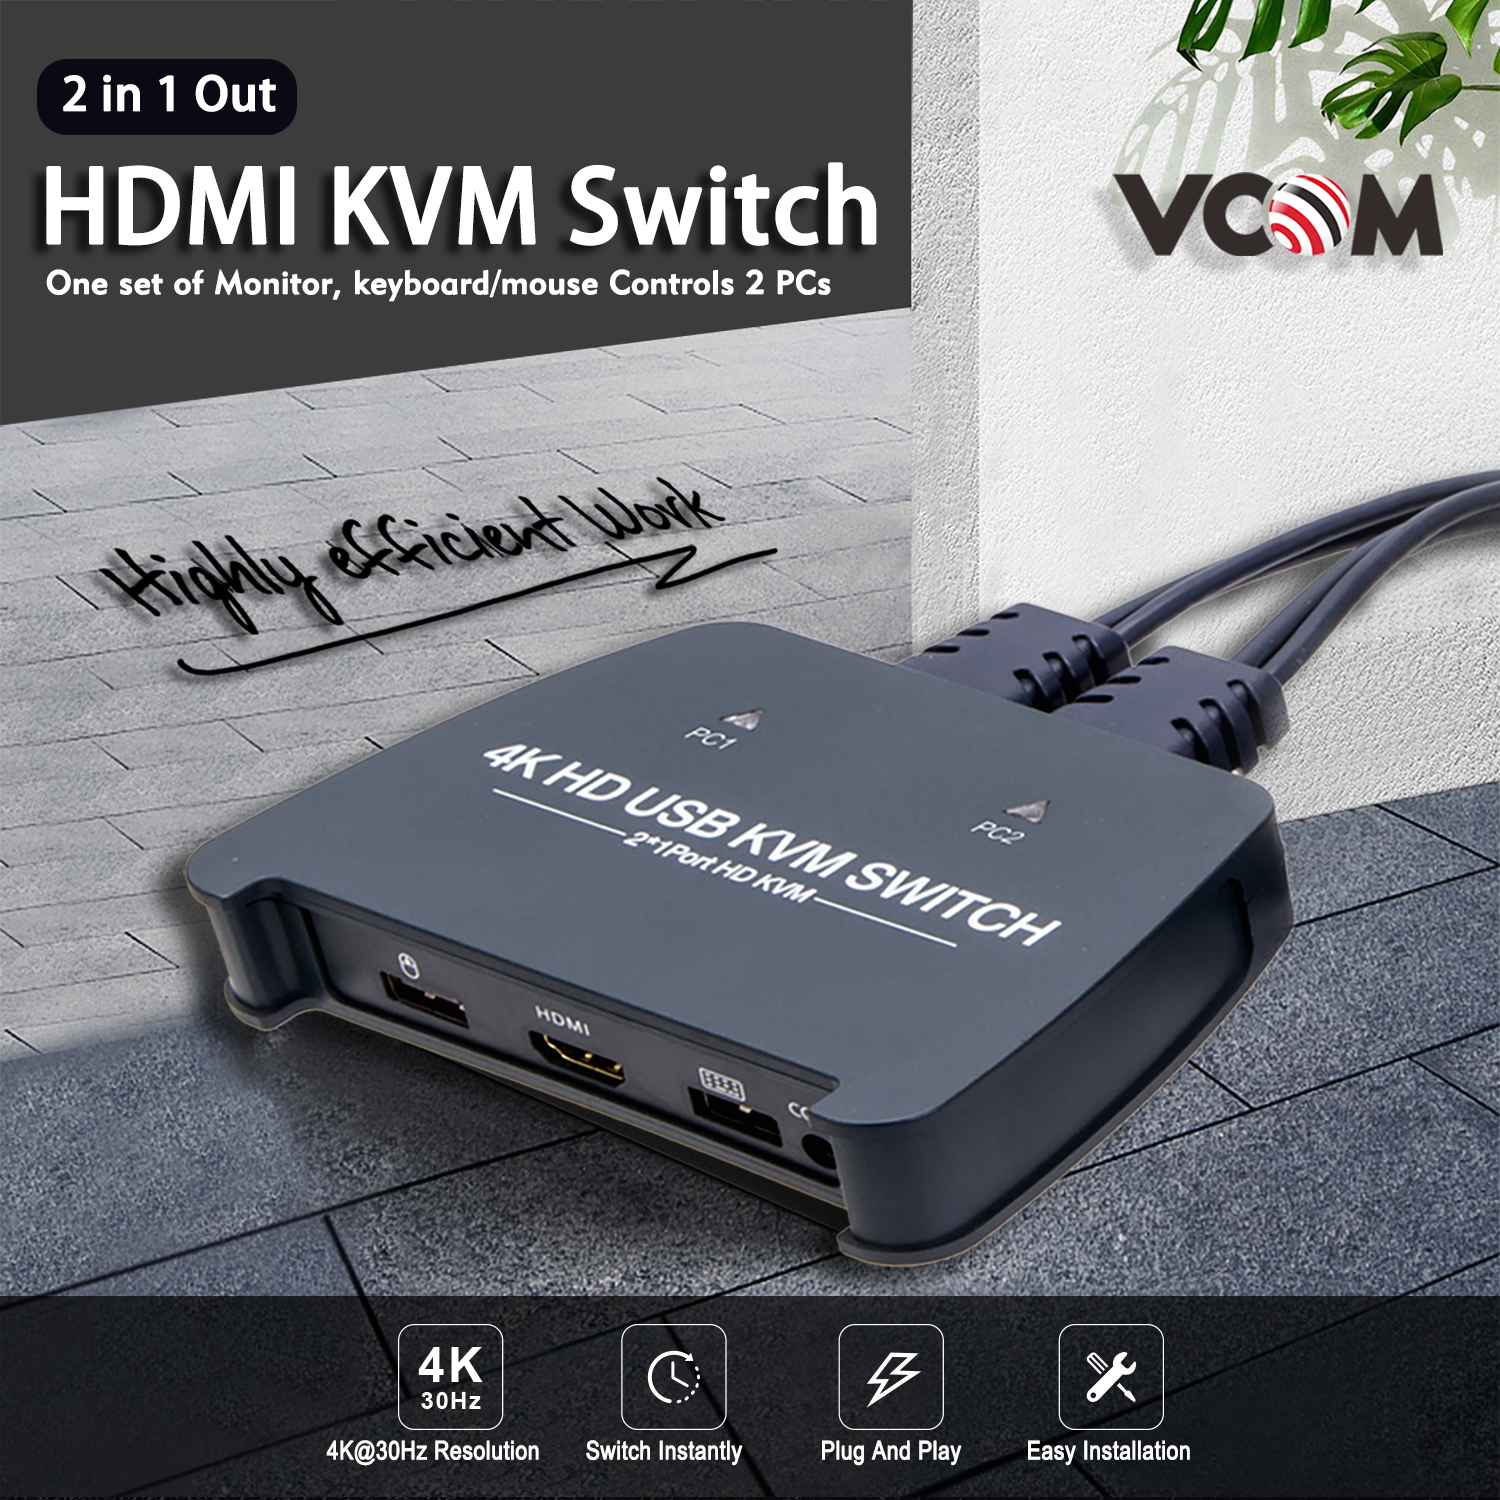 New Arrival! Vcom 2-Port HDMI KVM Switch